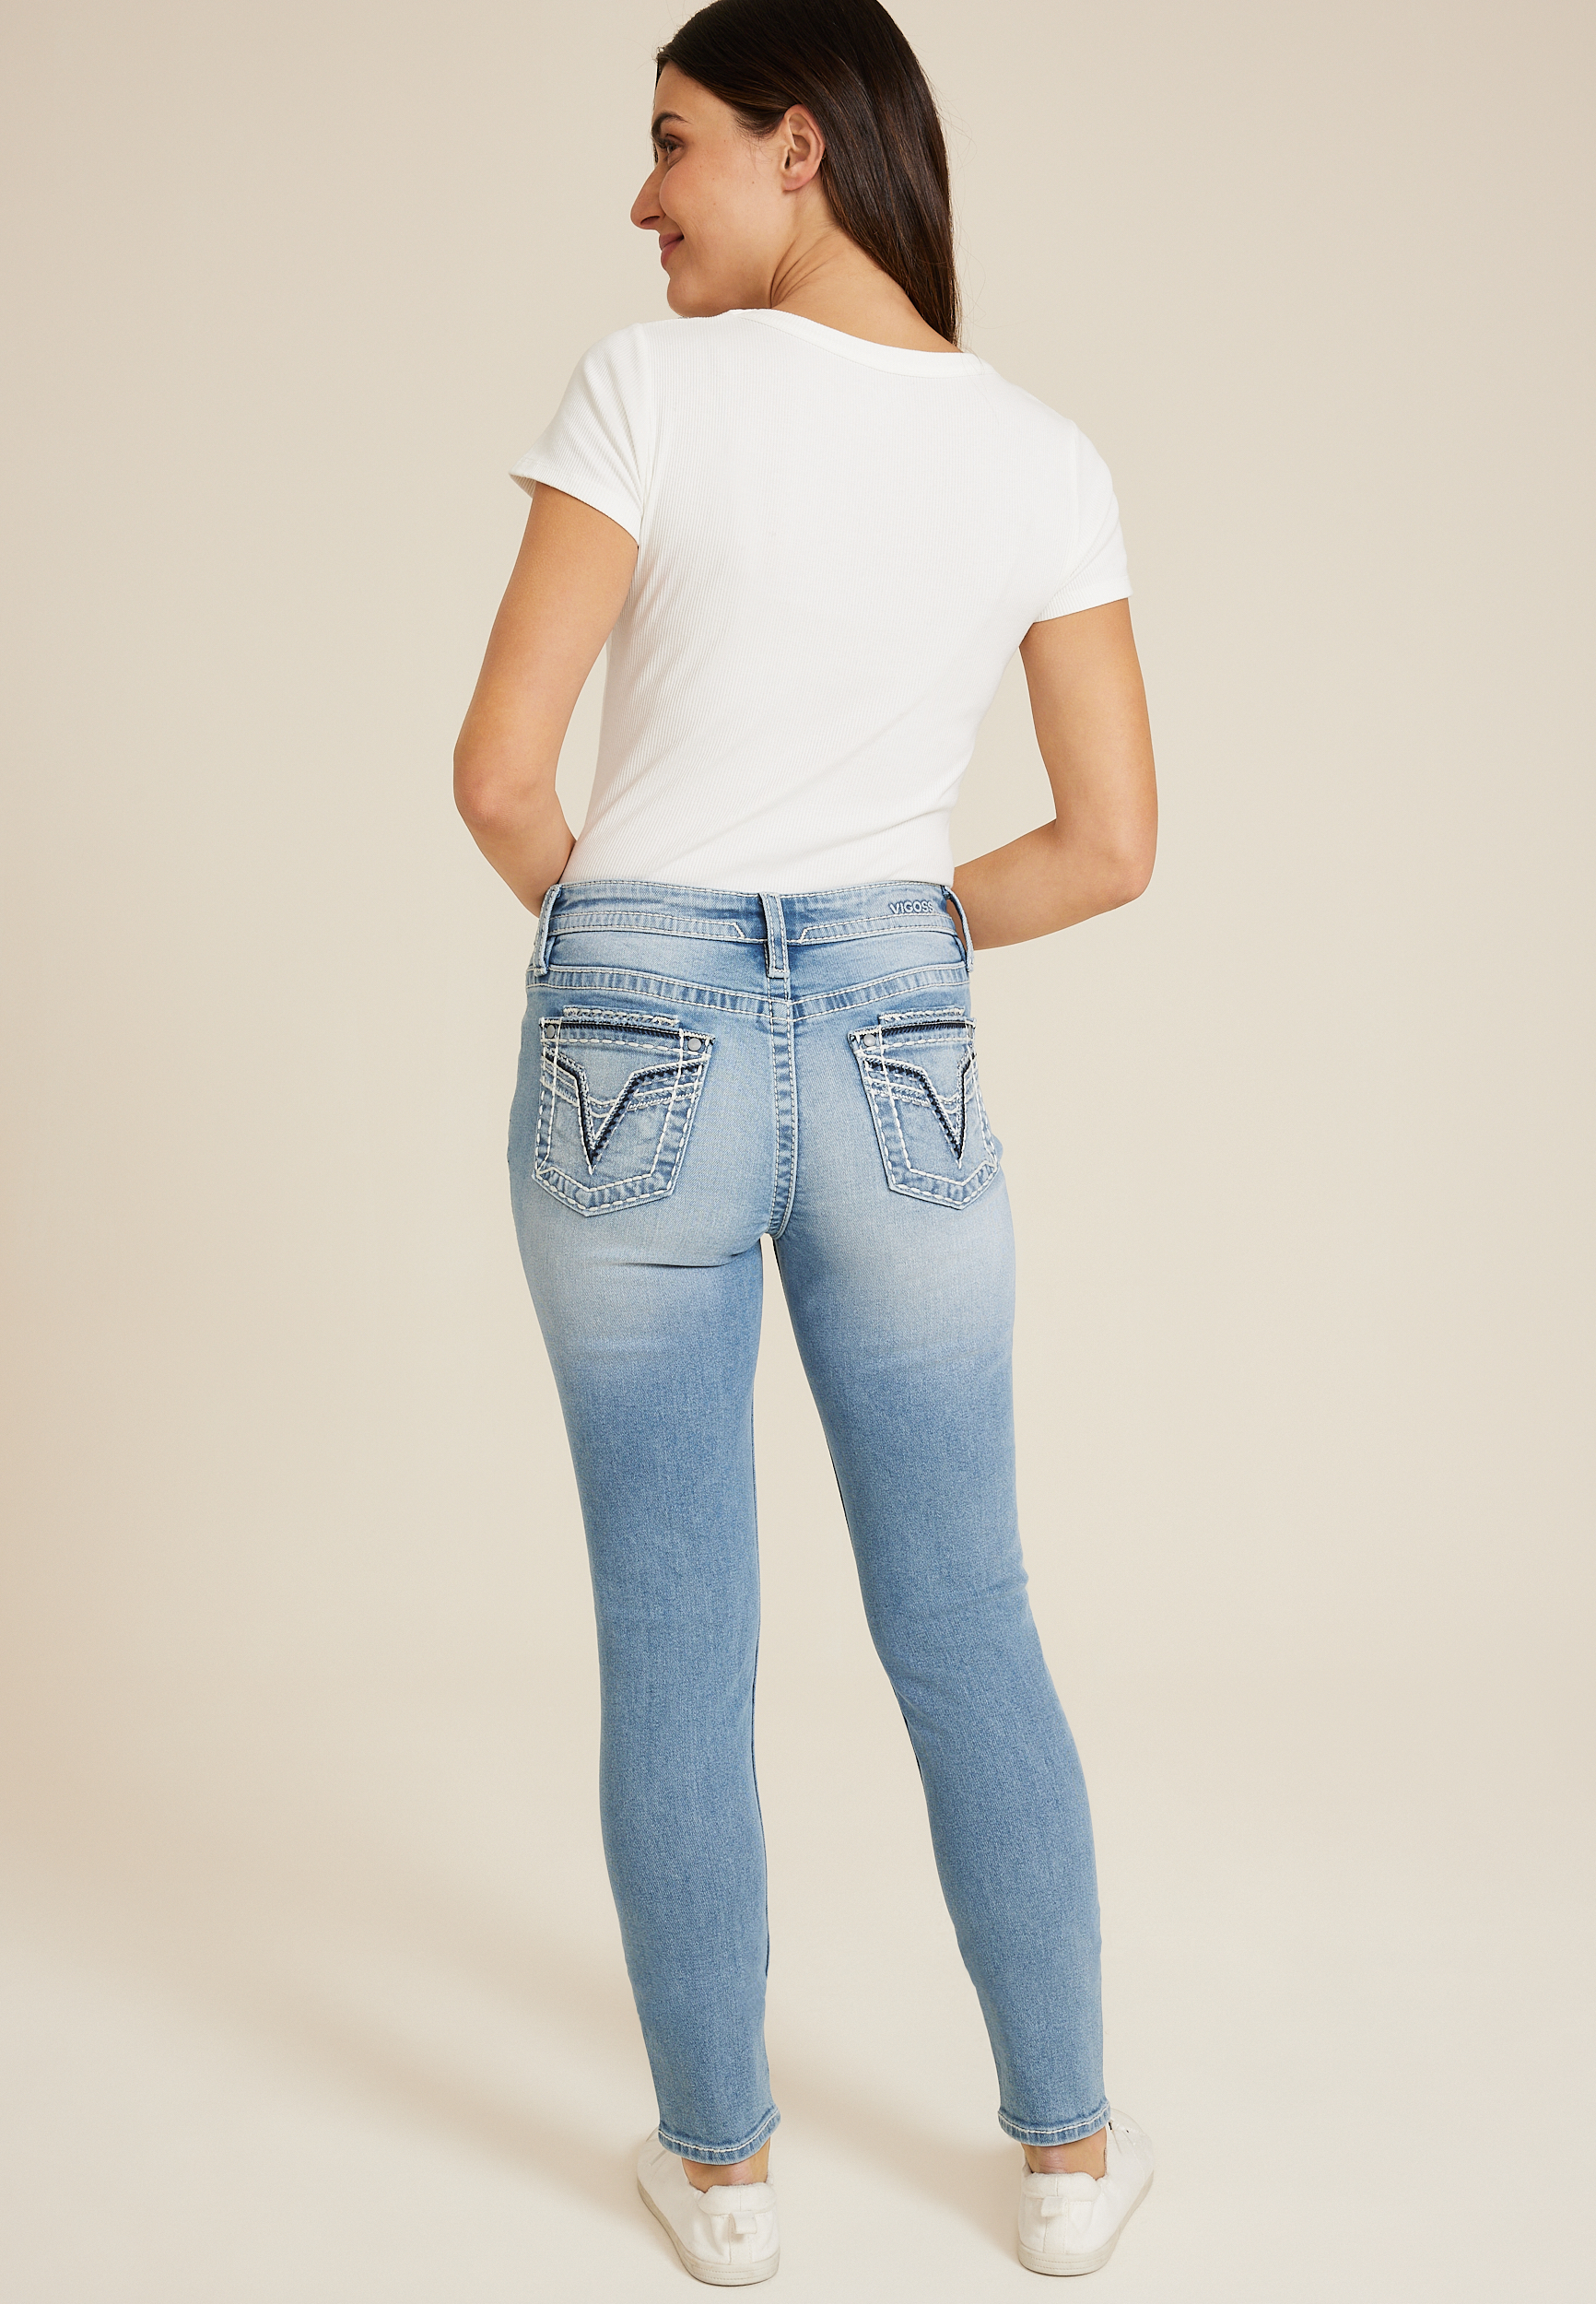 Vigoss Chelsea Capri Jeans Women Size 1/2 Measures 28x25 Distressed Mid Rise